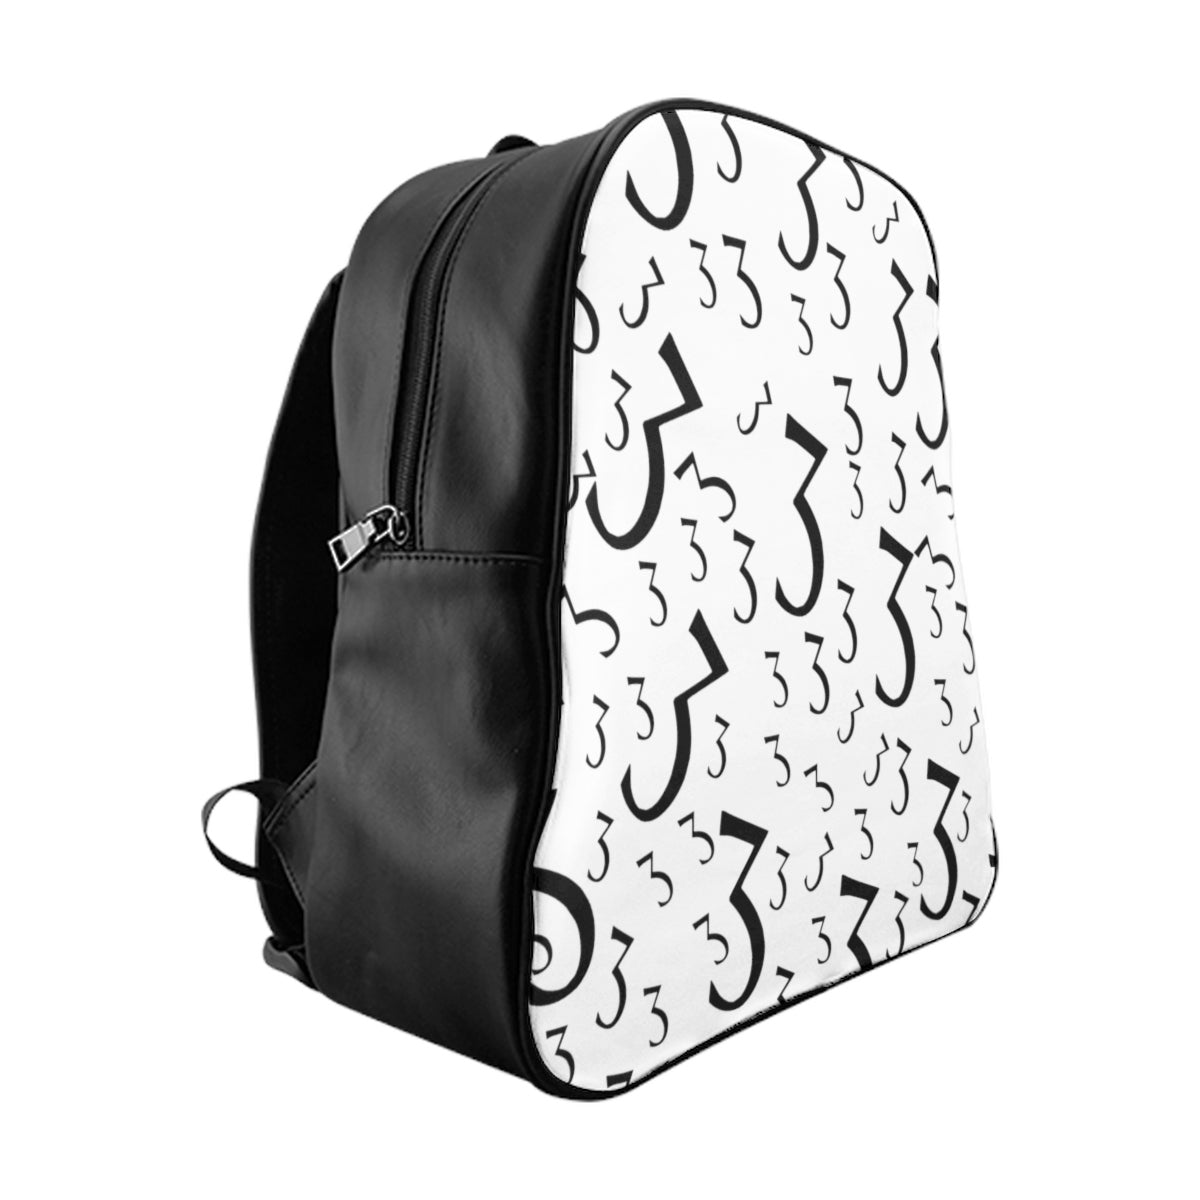 "3" Pattern Backpack